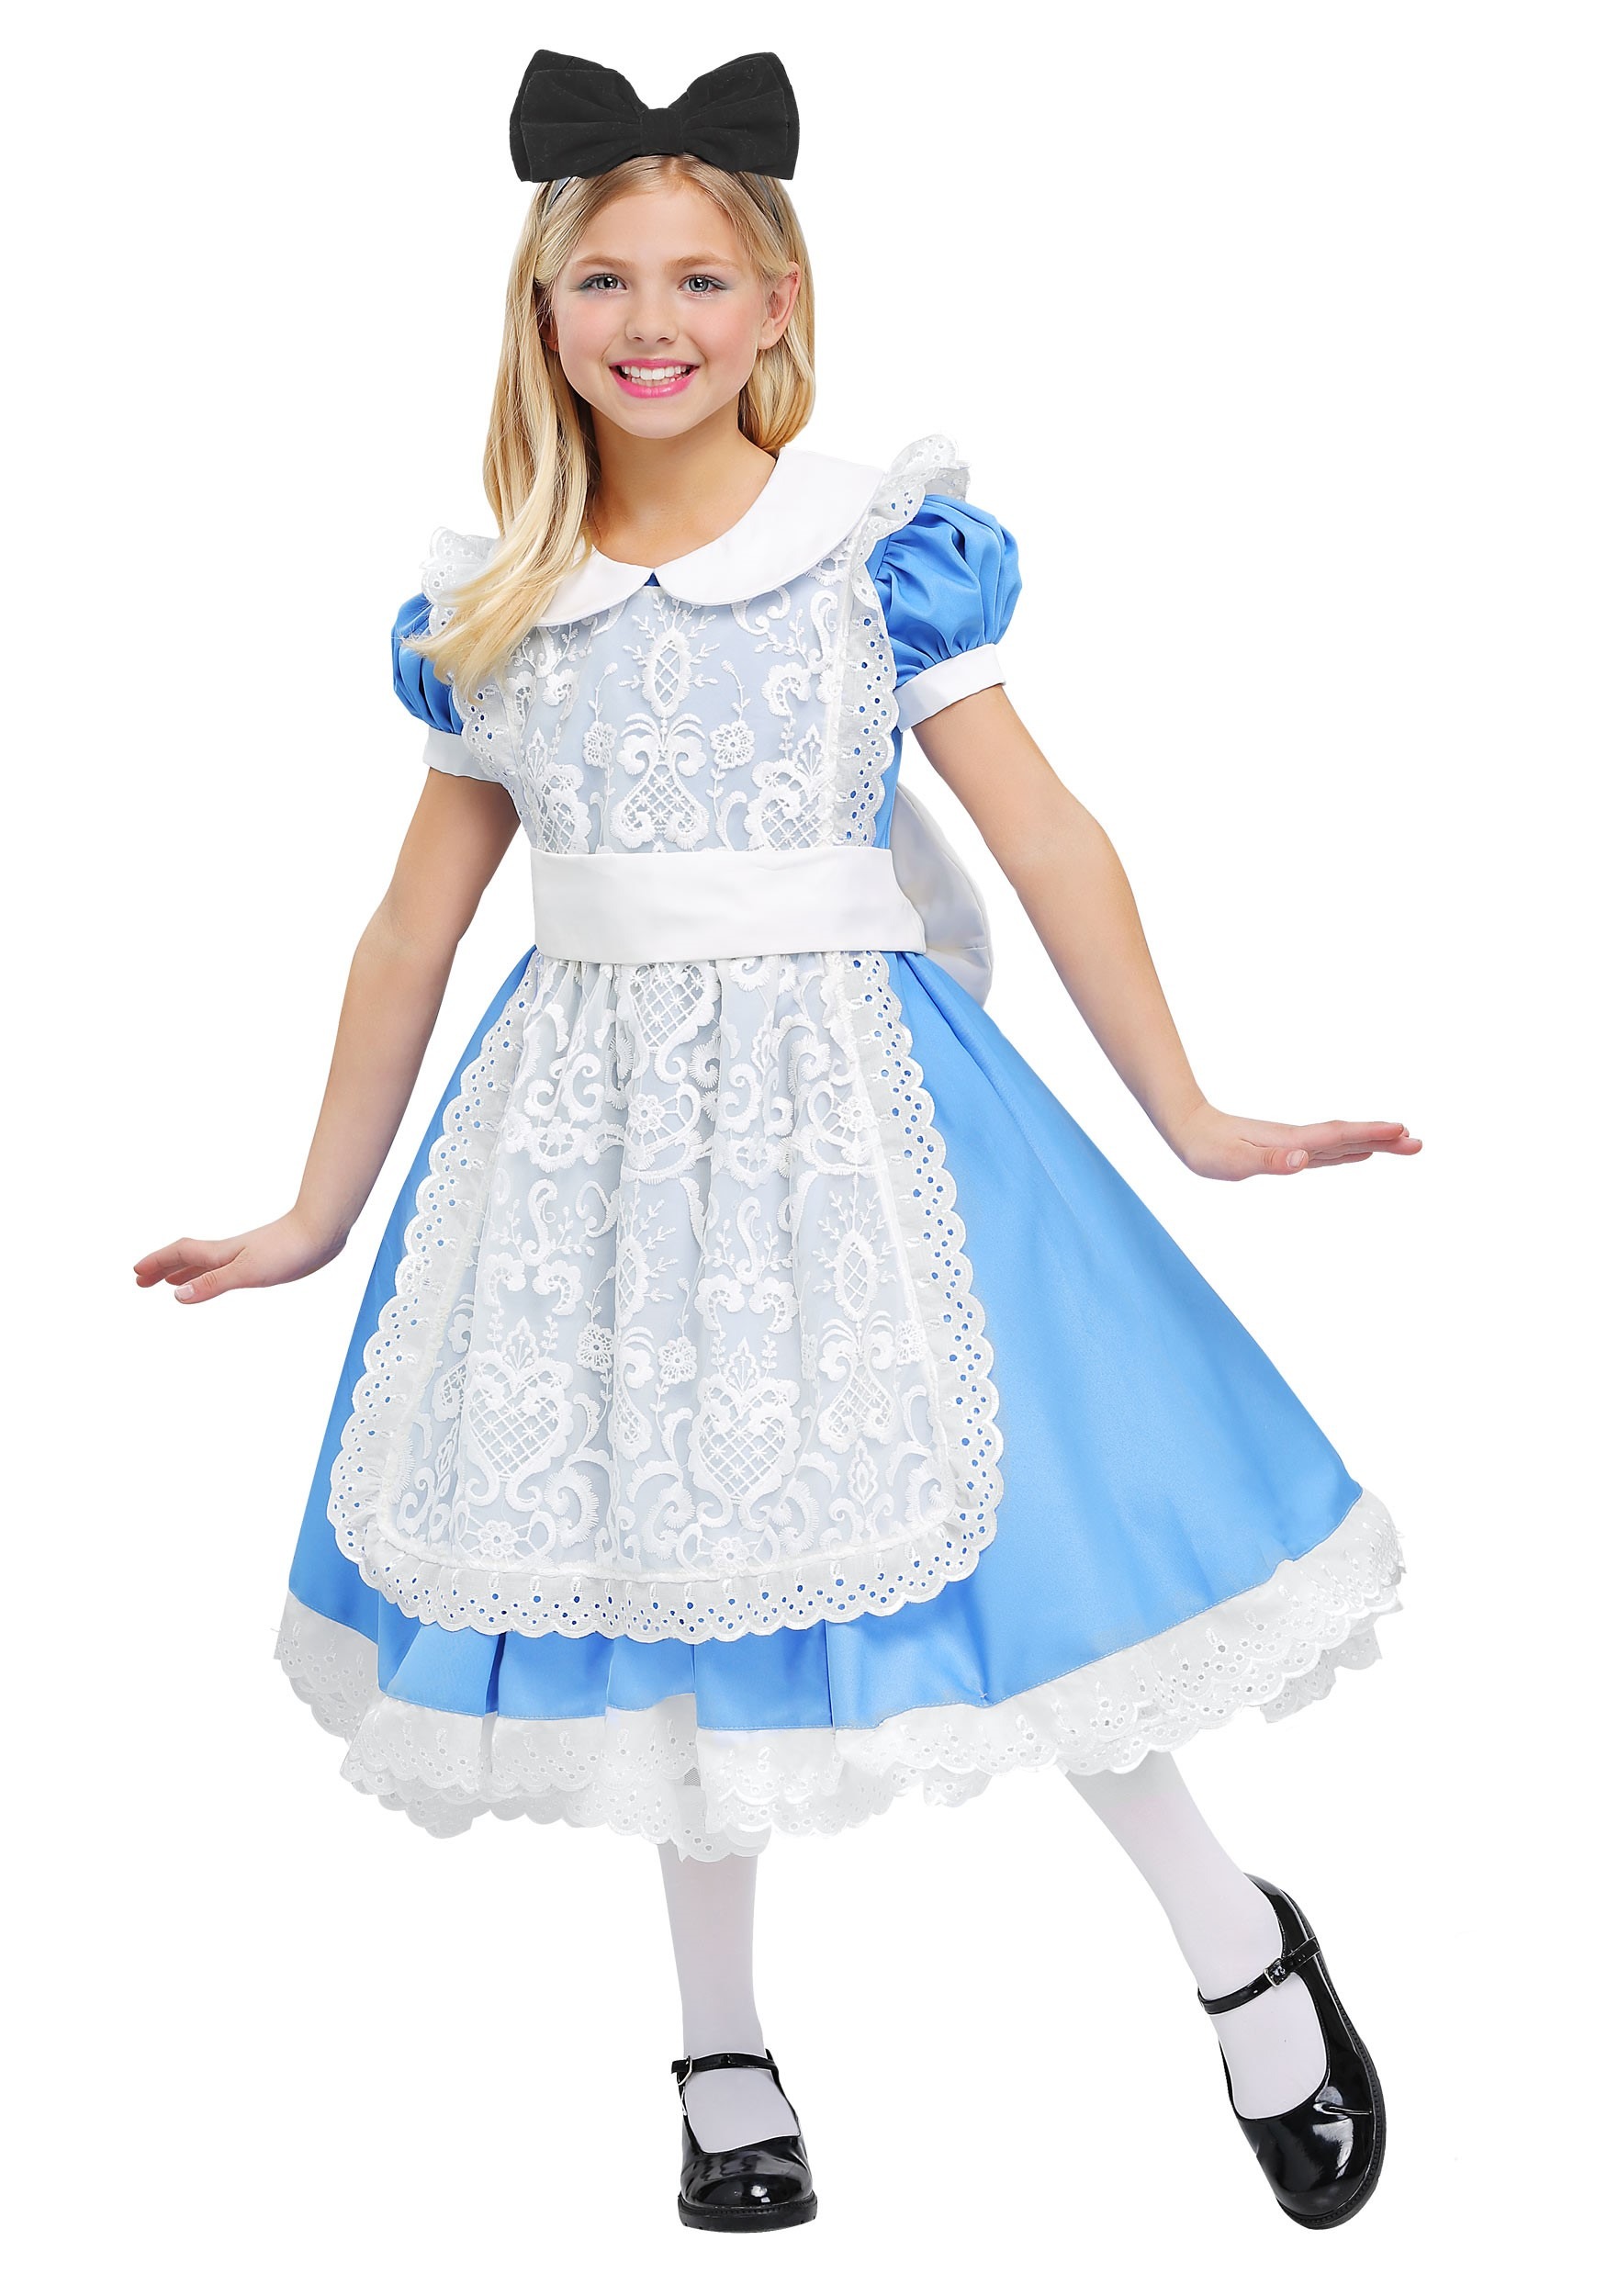 Photos - Fancy Dress FUN Costumes Elite Alice Costume for Girls Blue/White FUN6205CH